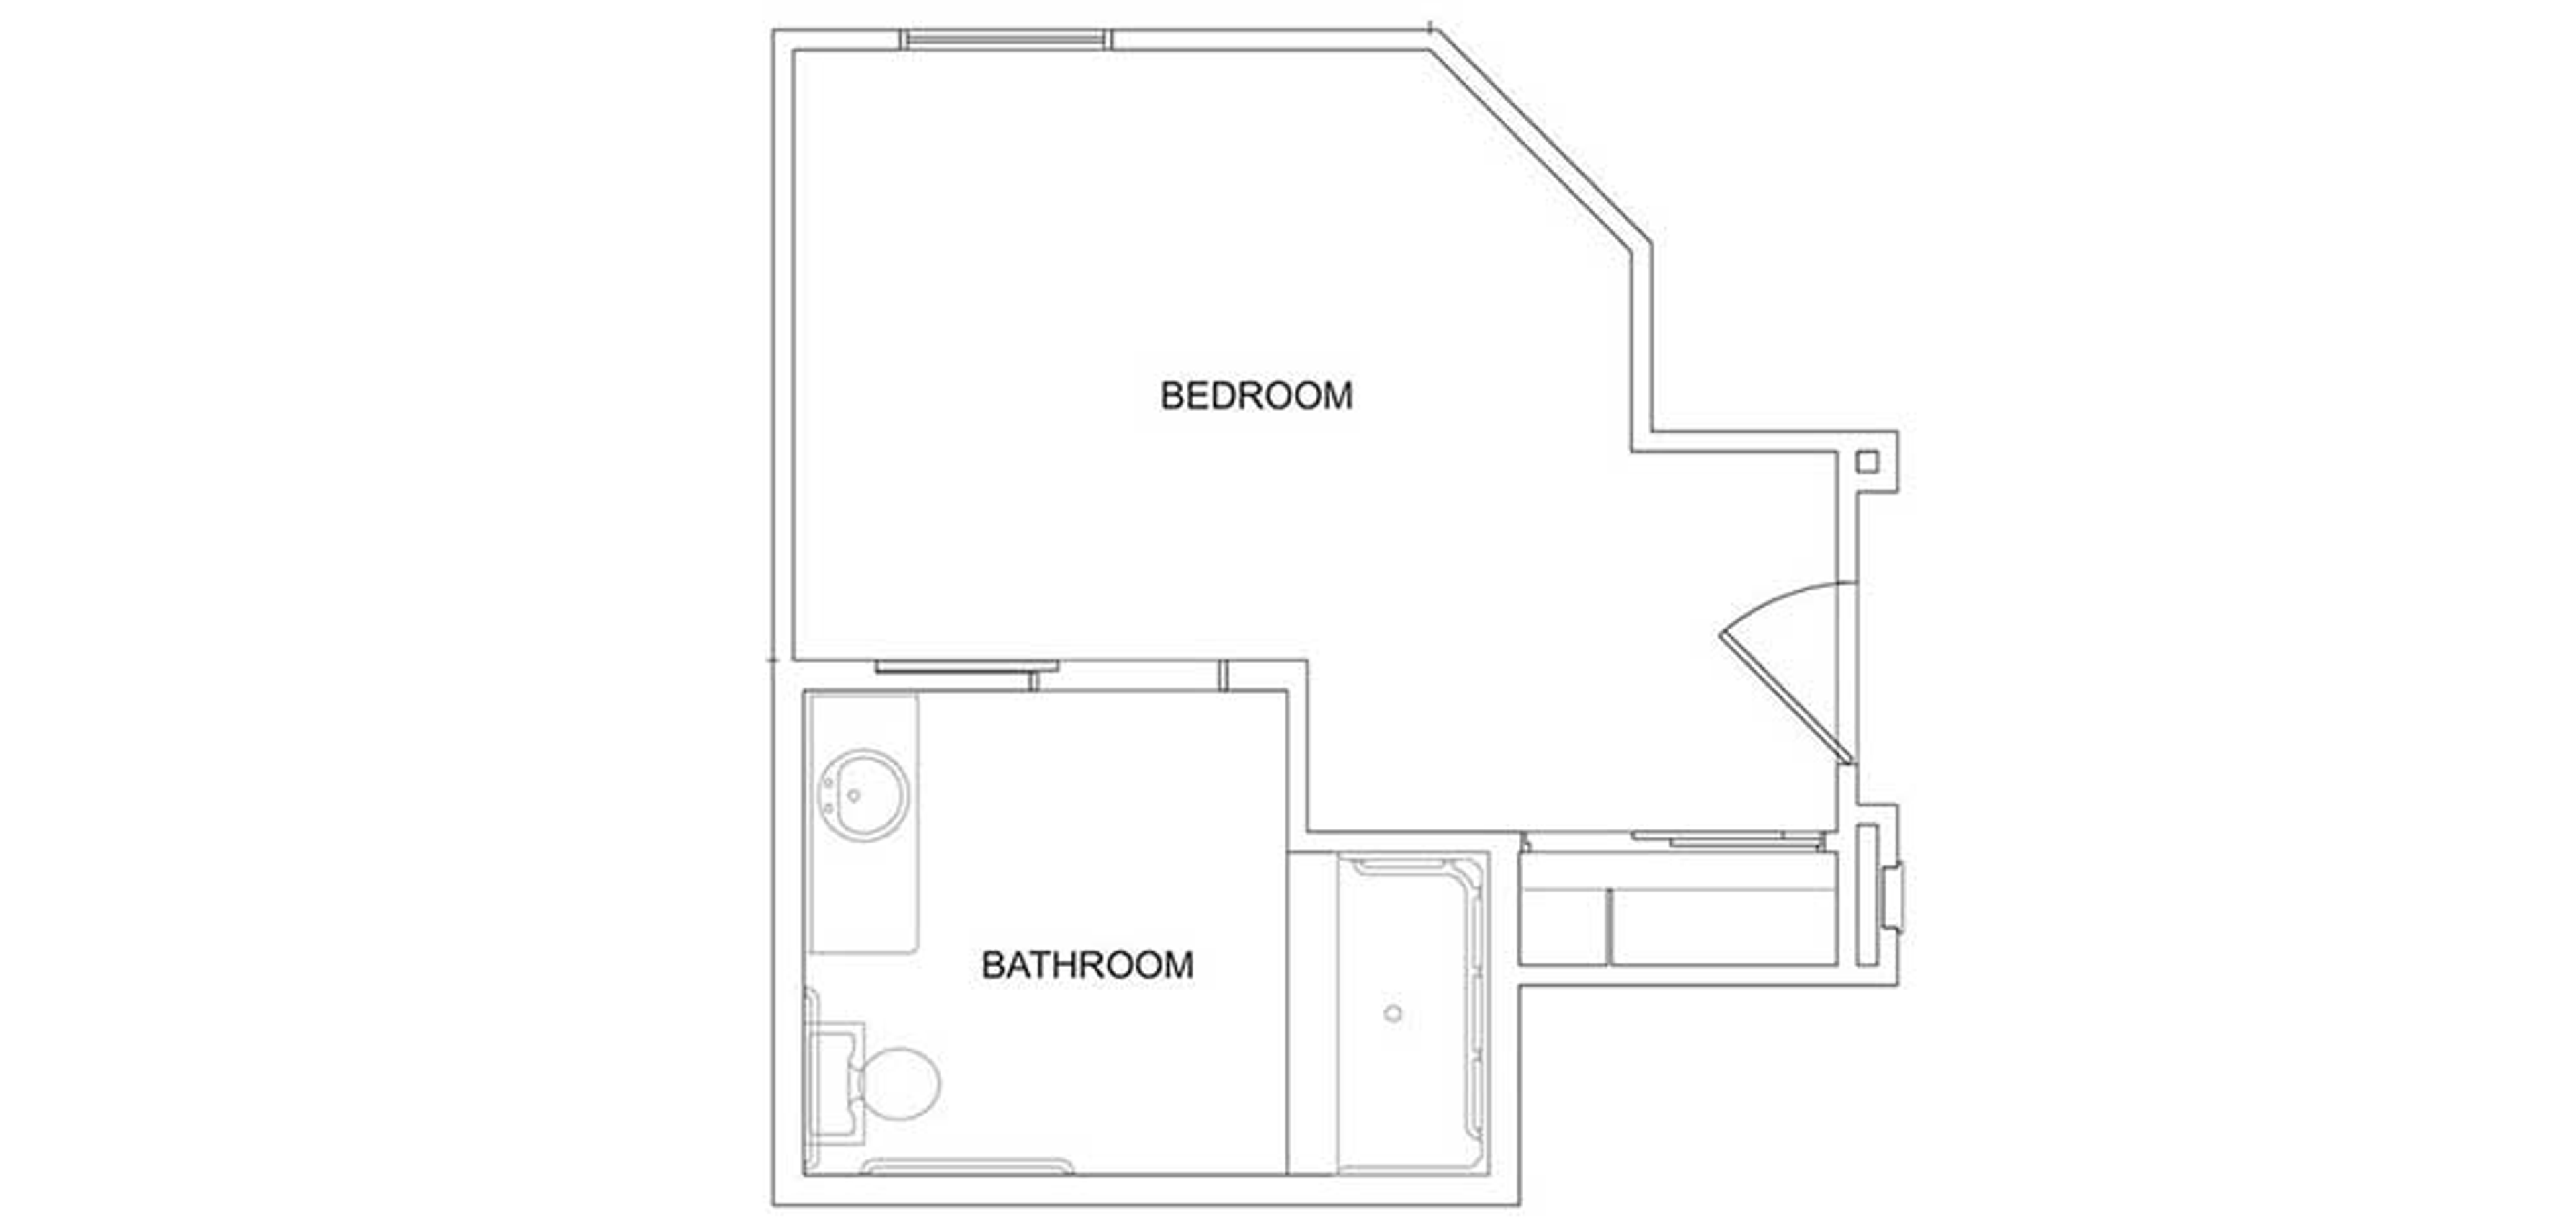 Floorplan - Pecan Pointe - 1B 1B Studio private